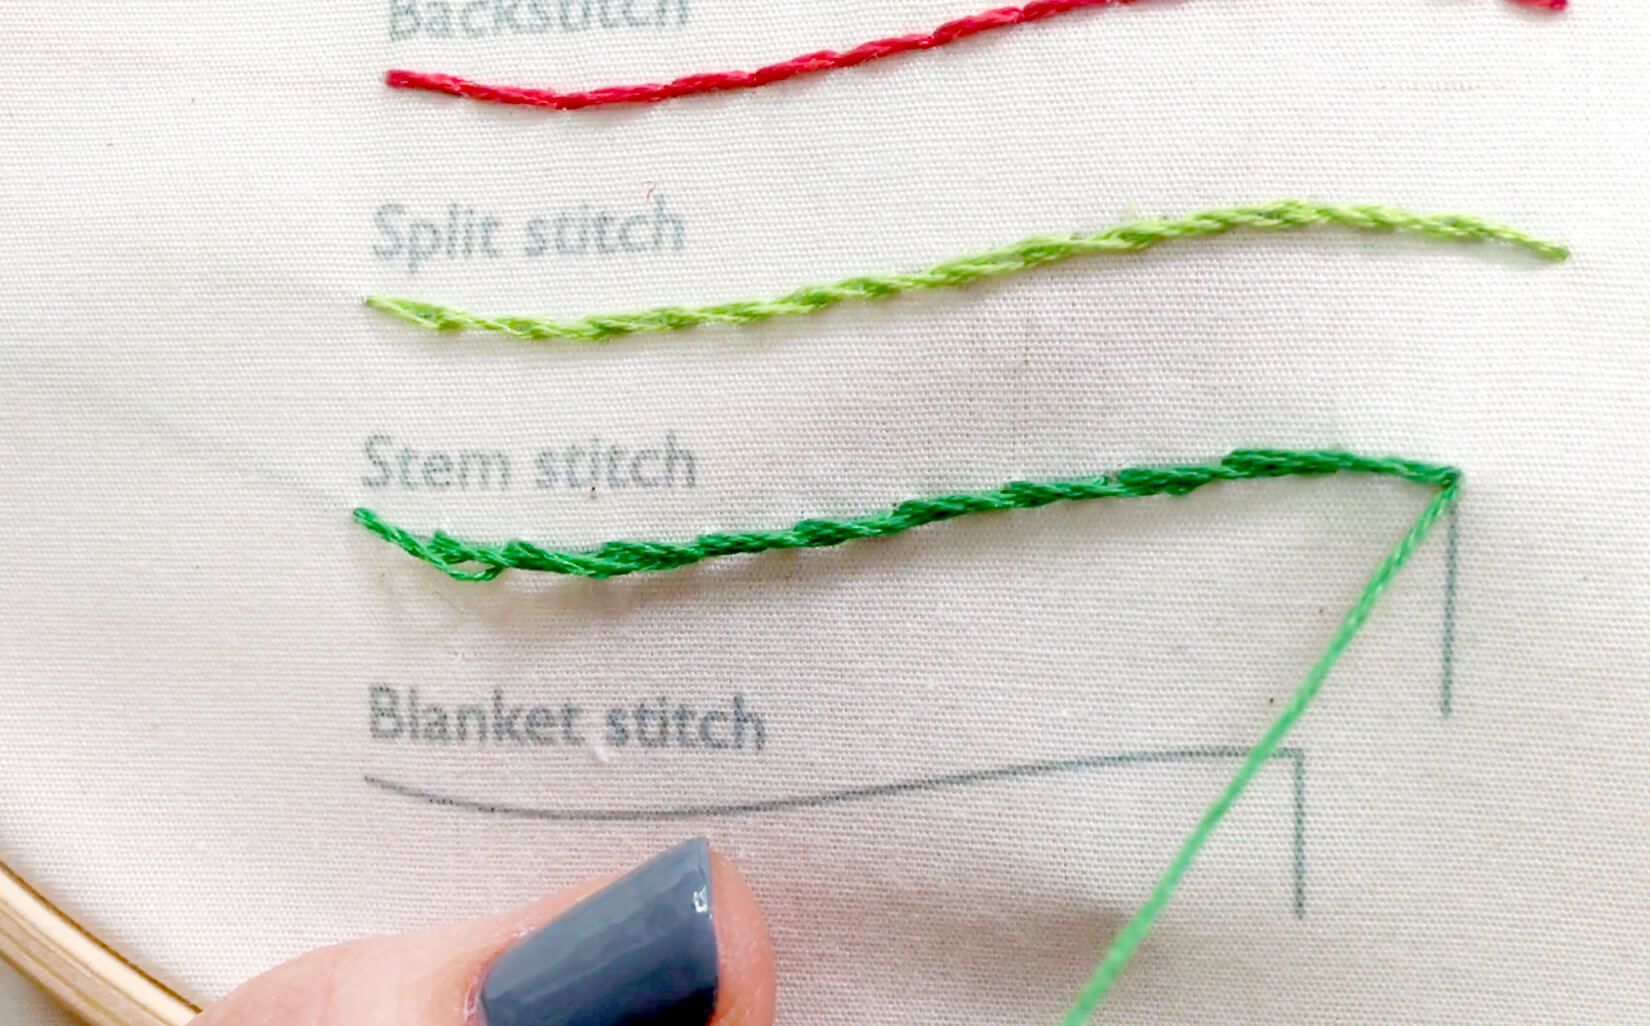 Image of stitching the stem stitch